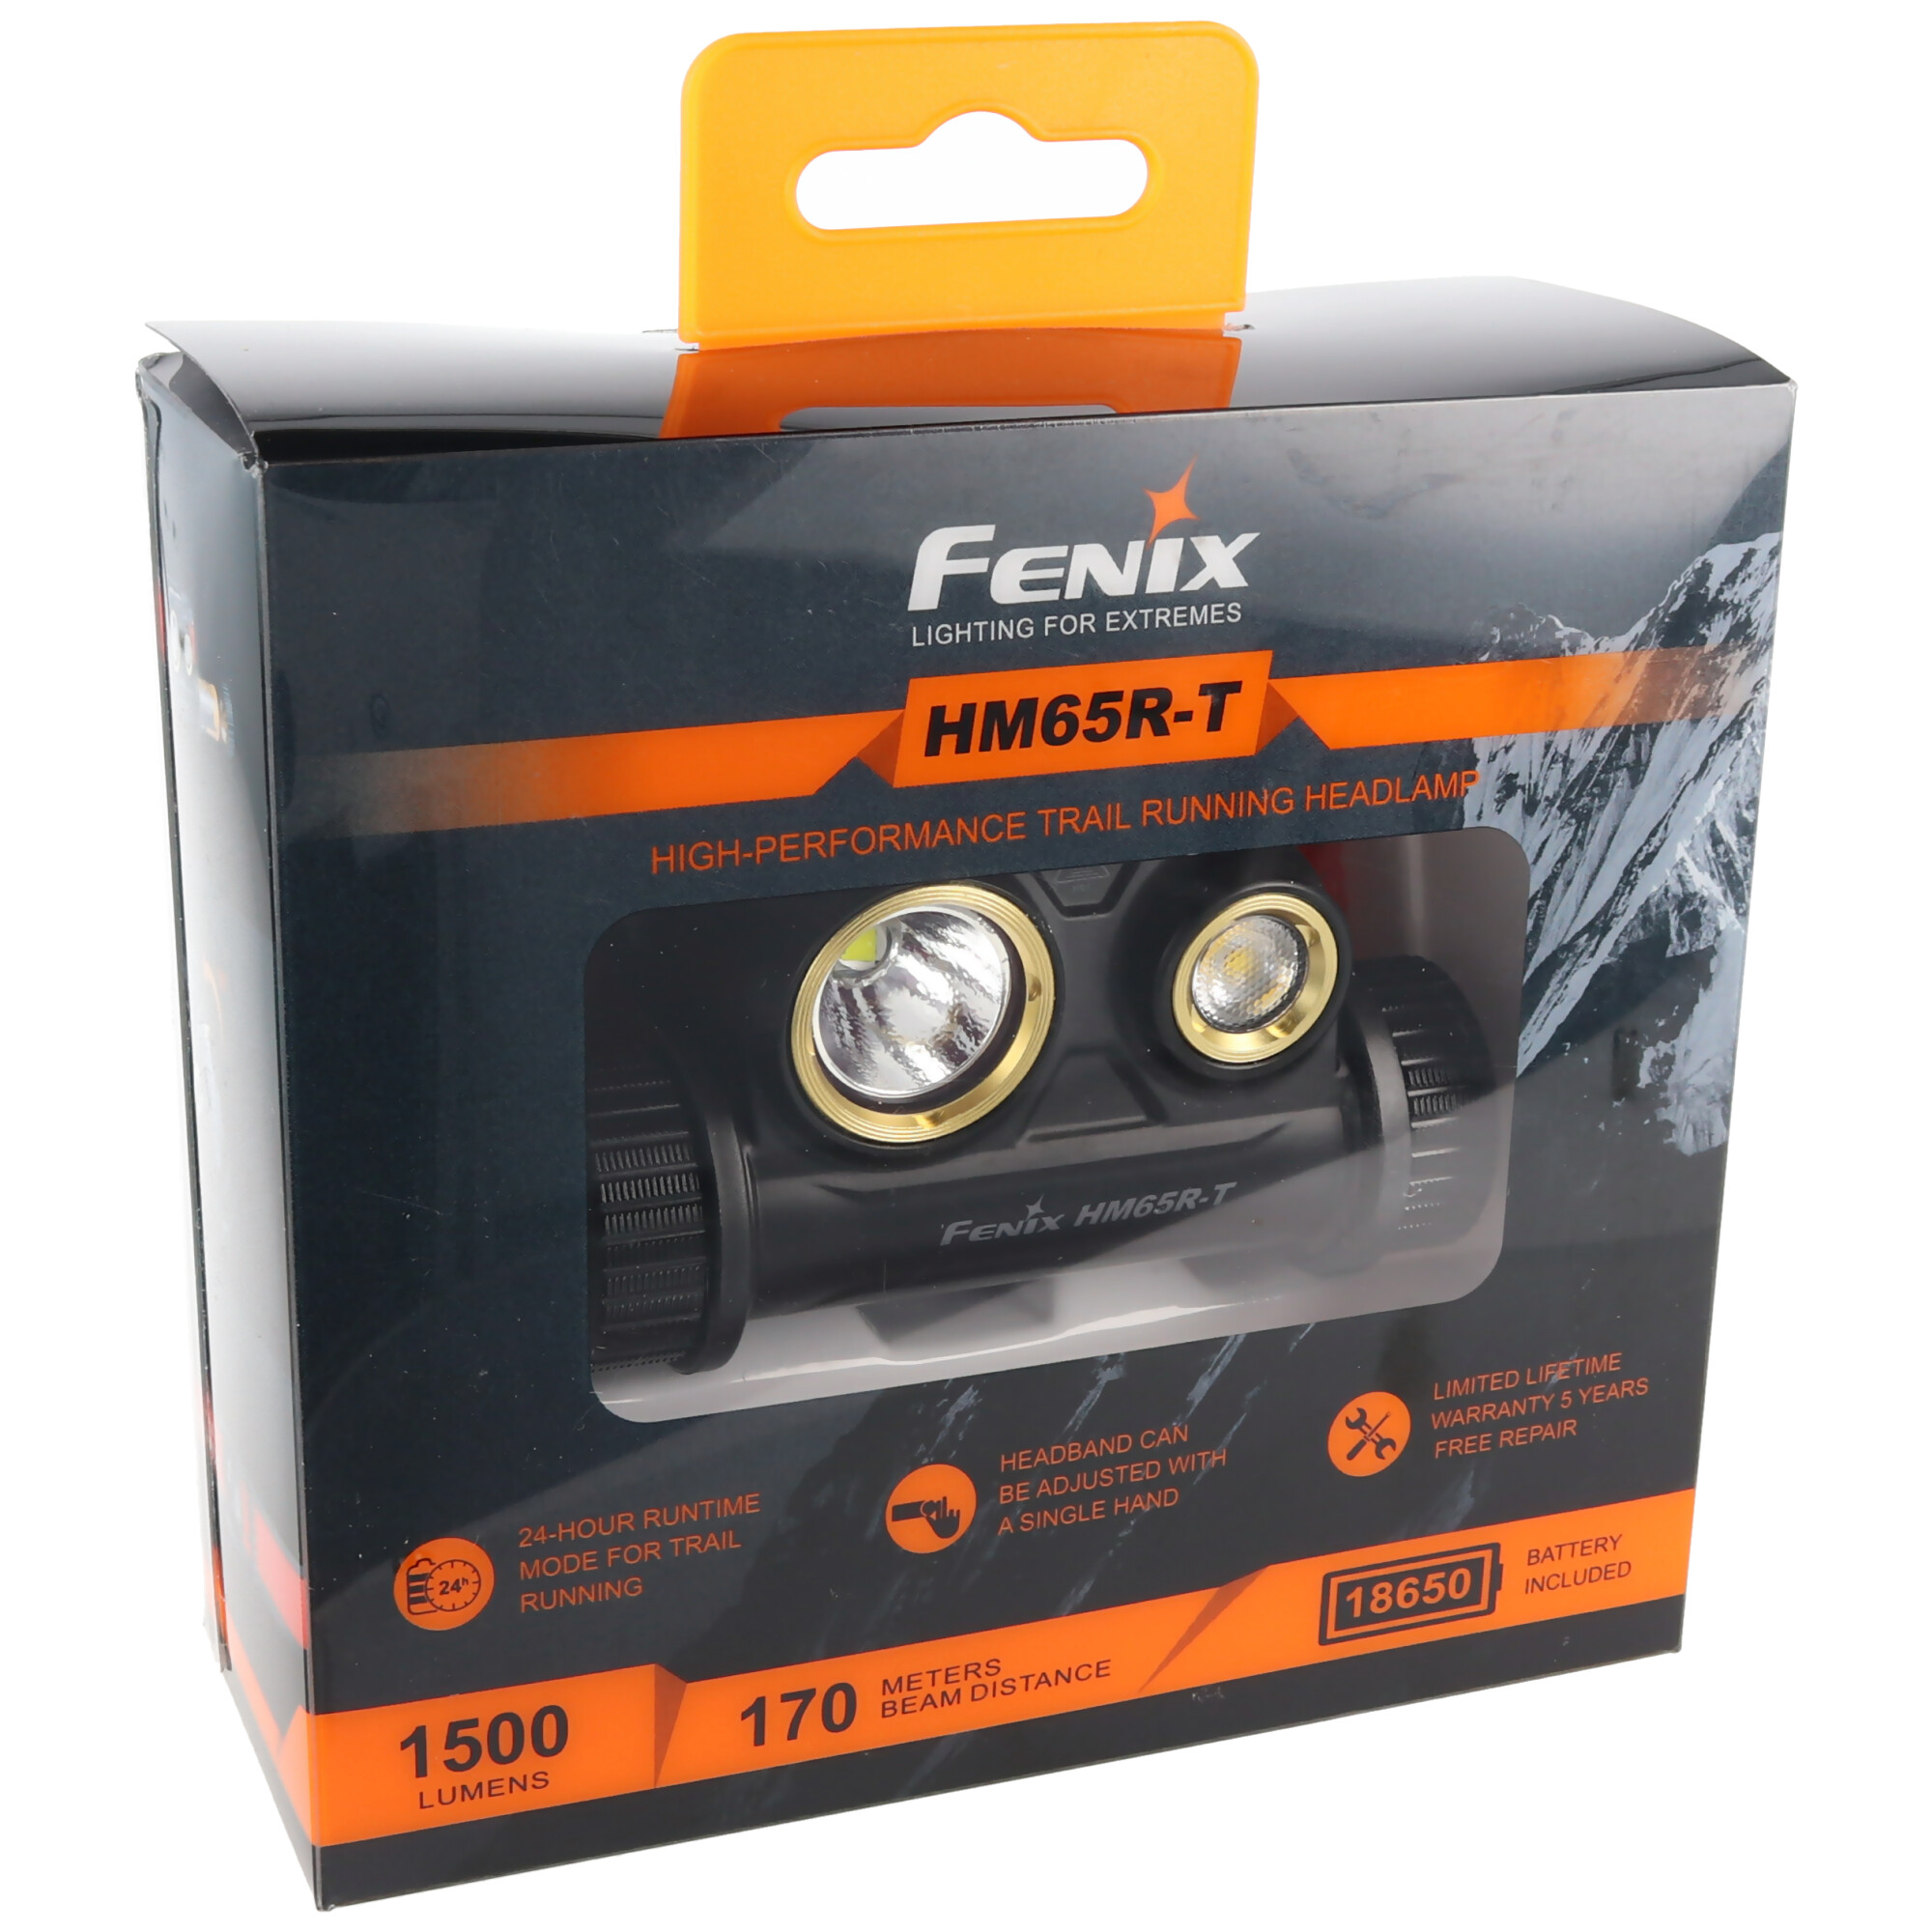 Fenix HM65R-T Stirnlampe, wiederaufladbare LED Stirnleuchte mit max. 1300 Lumen, Ladung über USB-C, inklusive Fenix ARB-L18-3500 Akku